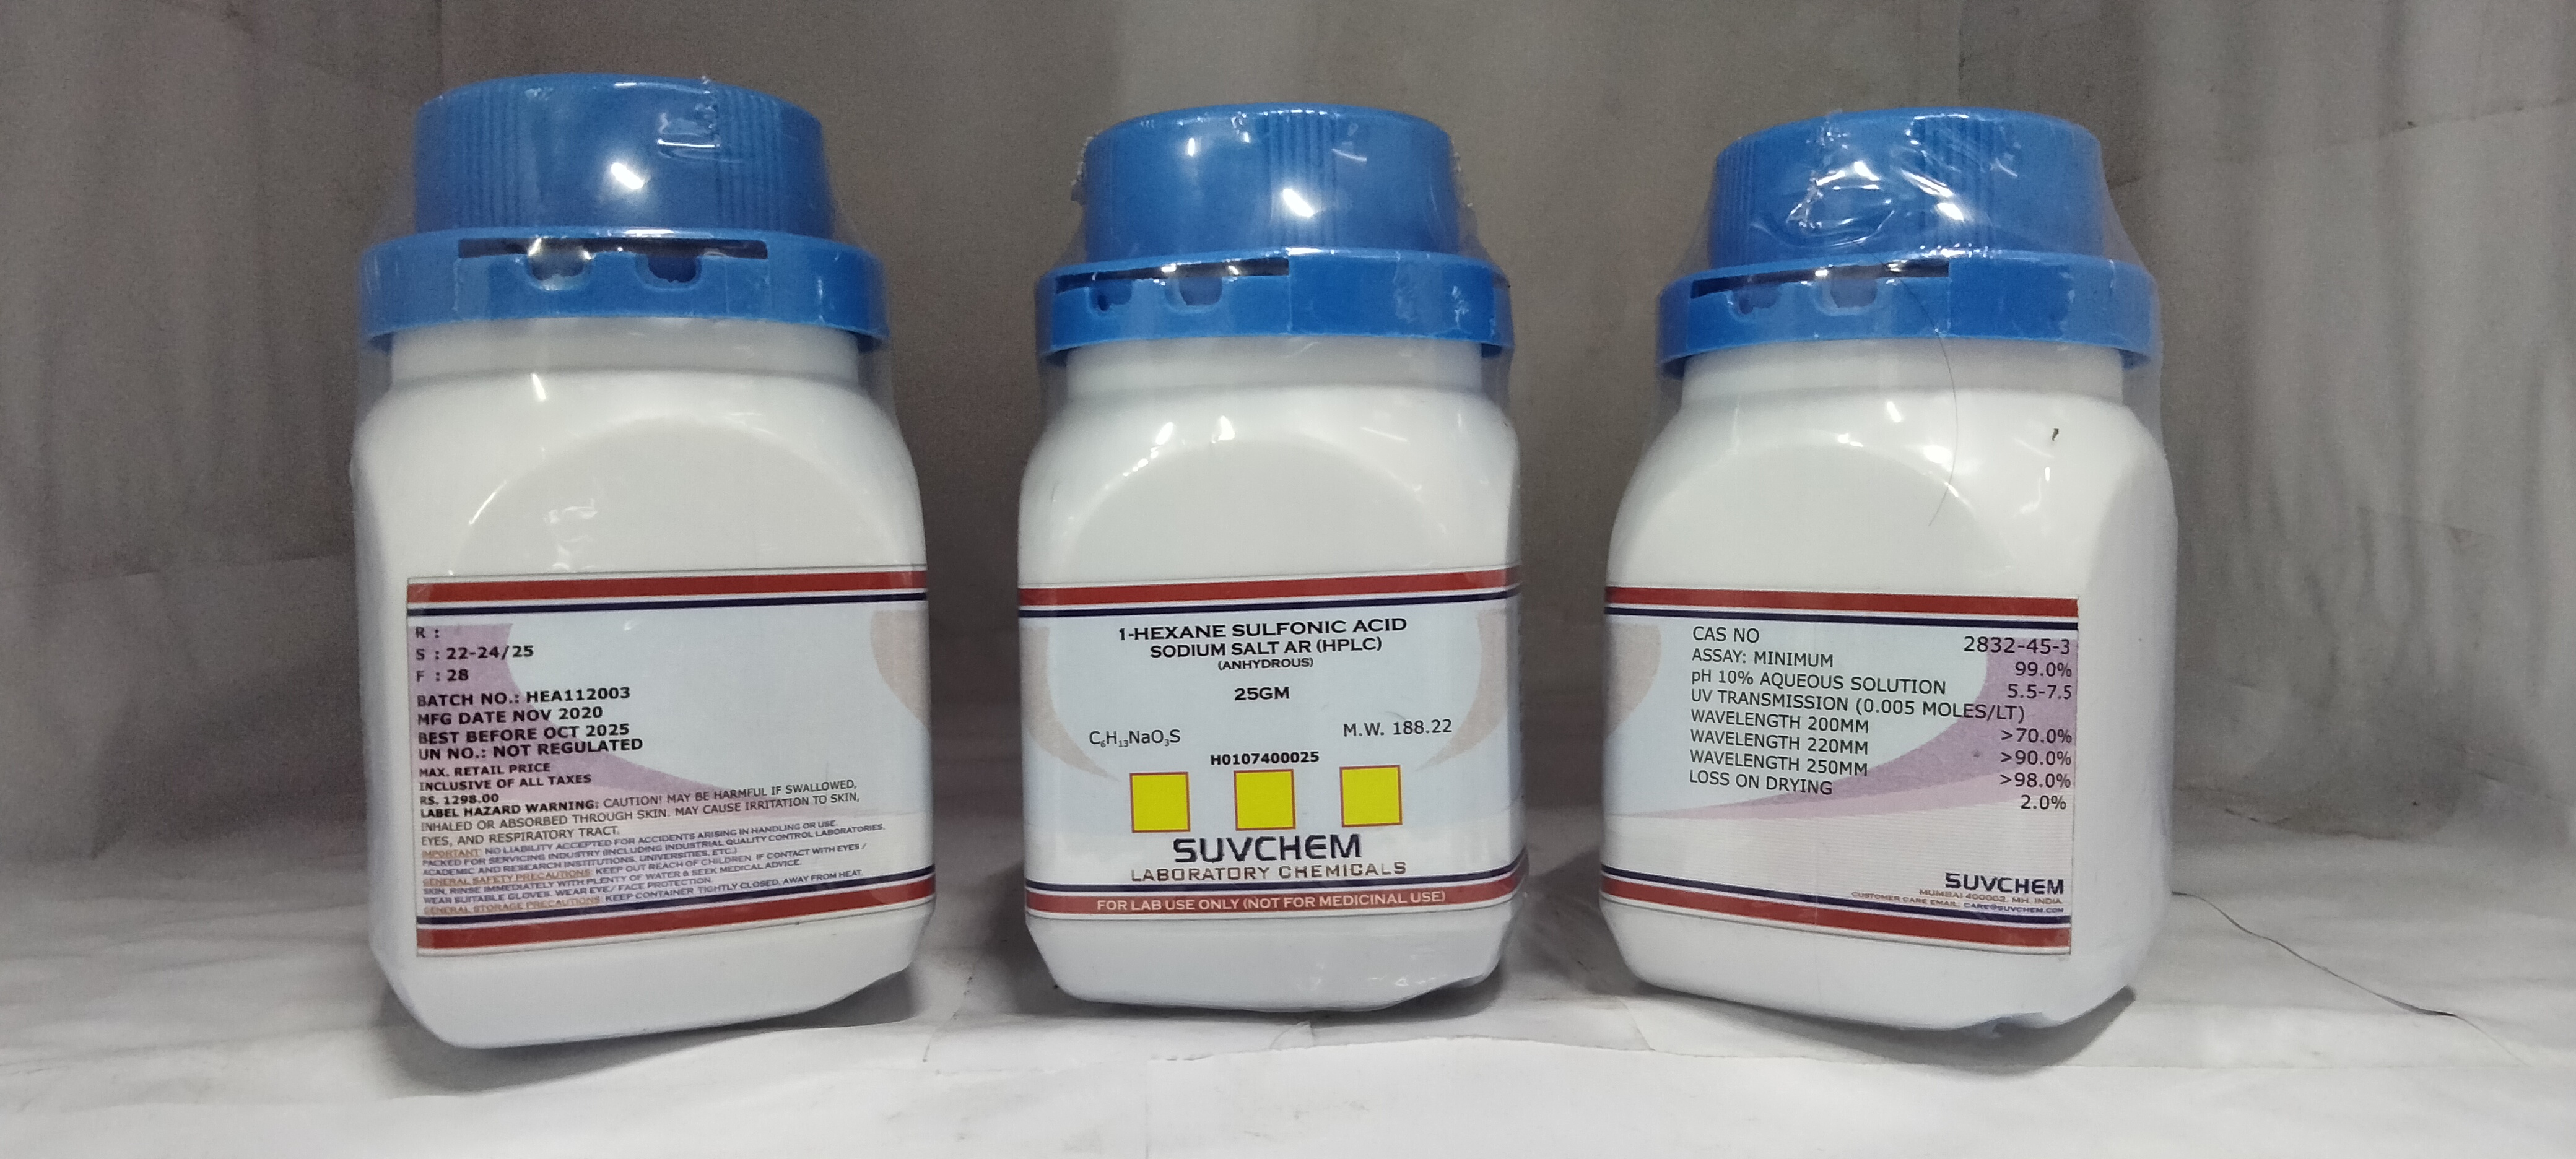 1-HEXANE SULPHONIC ACID SODIUM SALT ANHYDROUS (HPLC) AR 